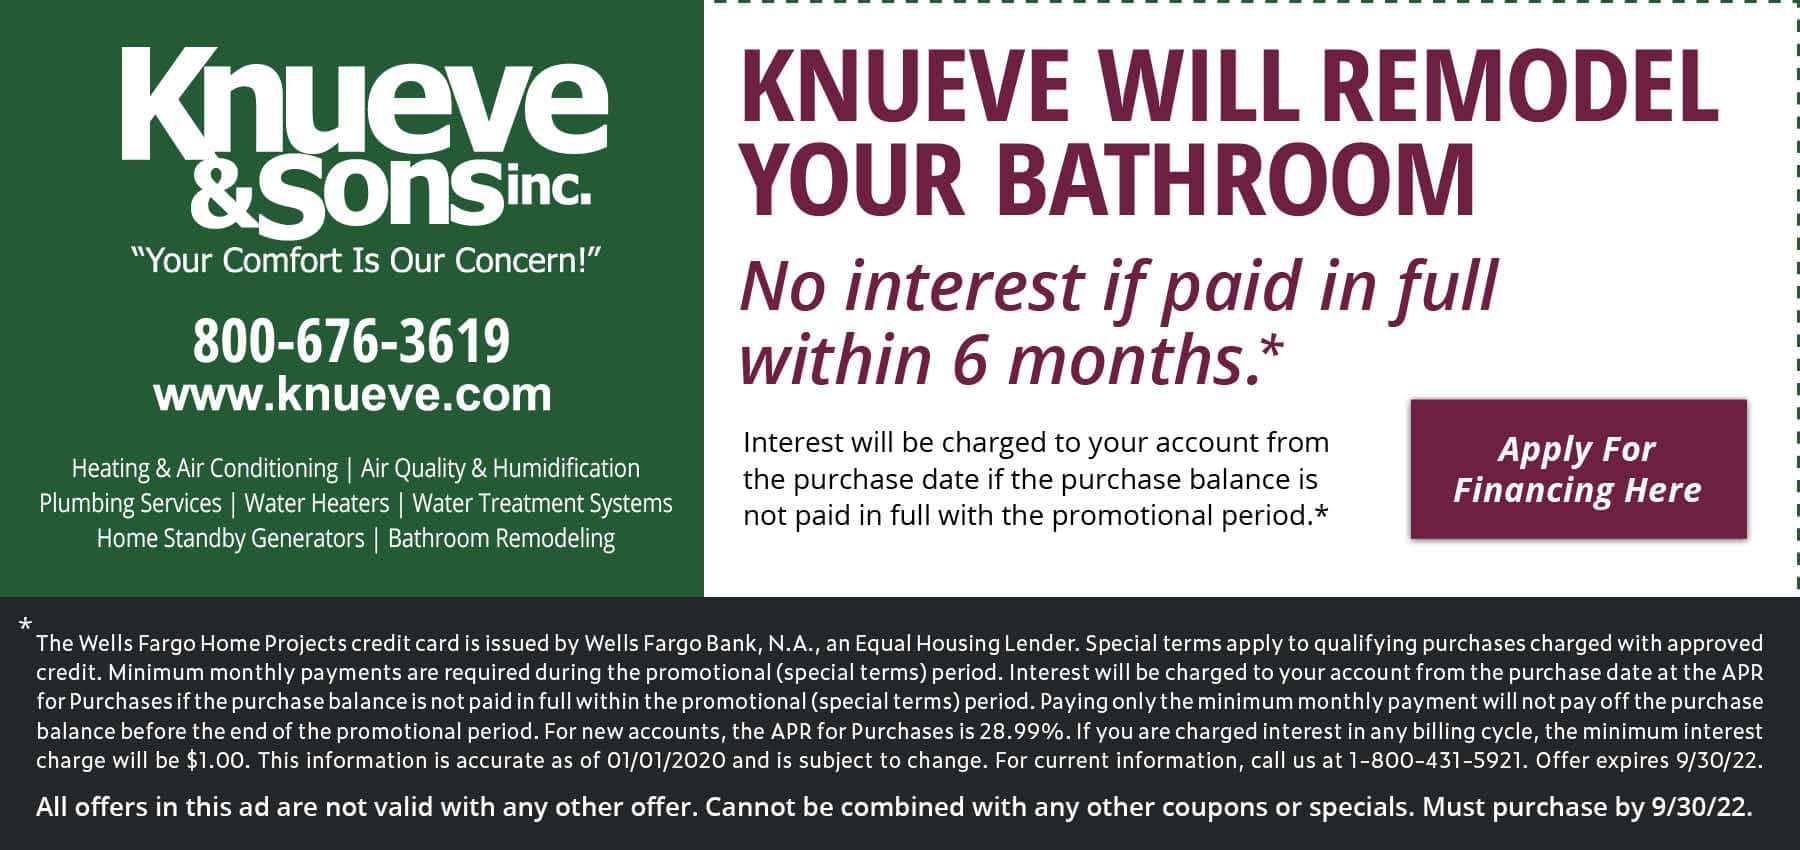 Knueve will remodel your Bathroom